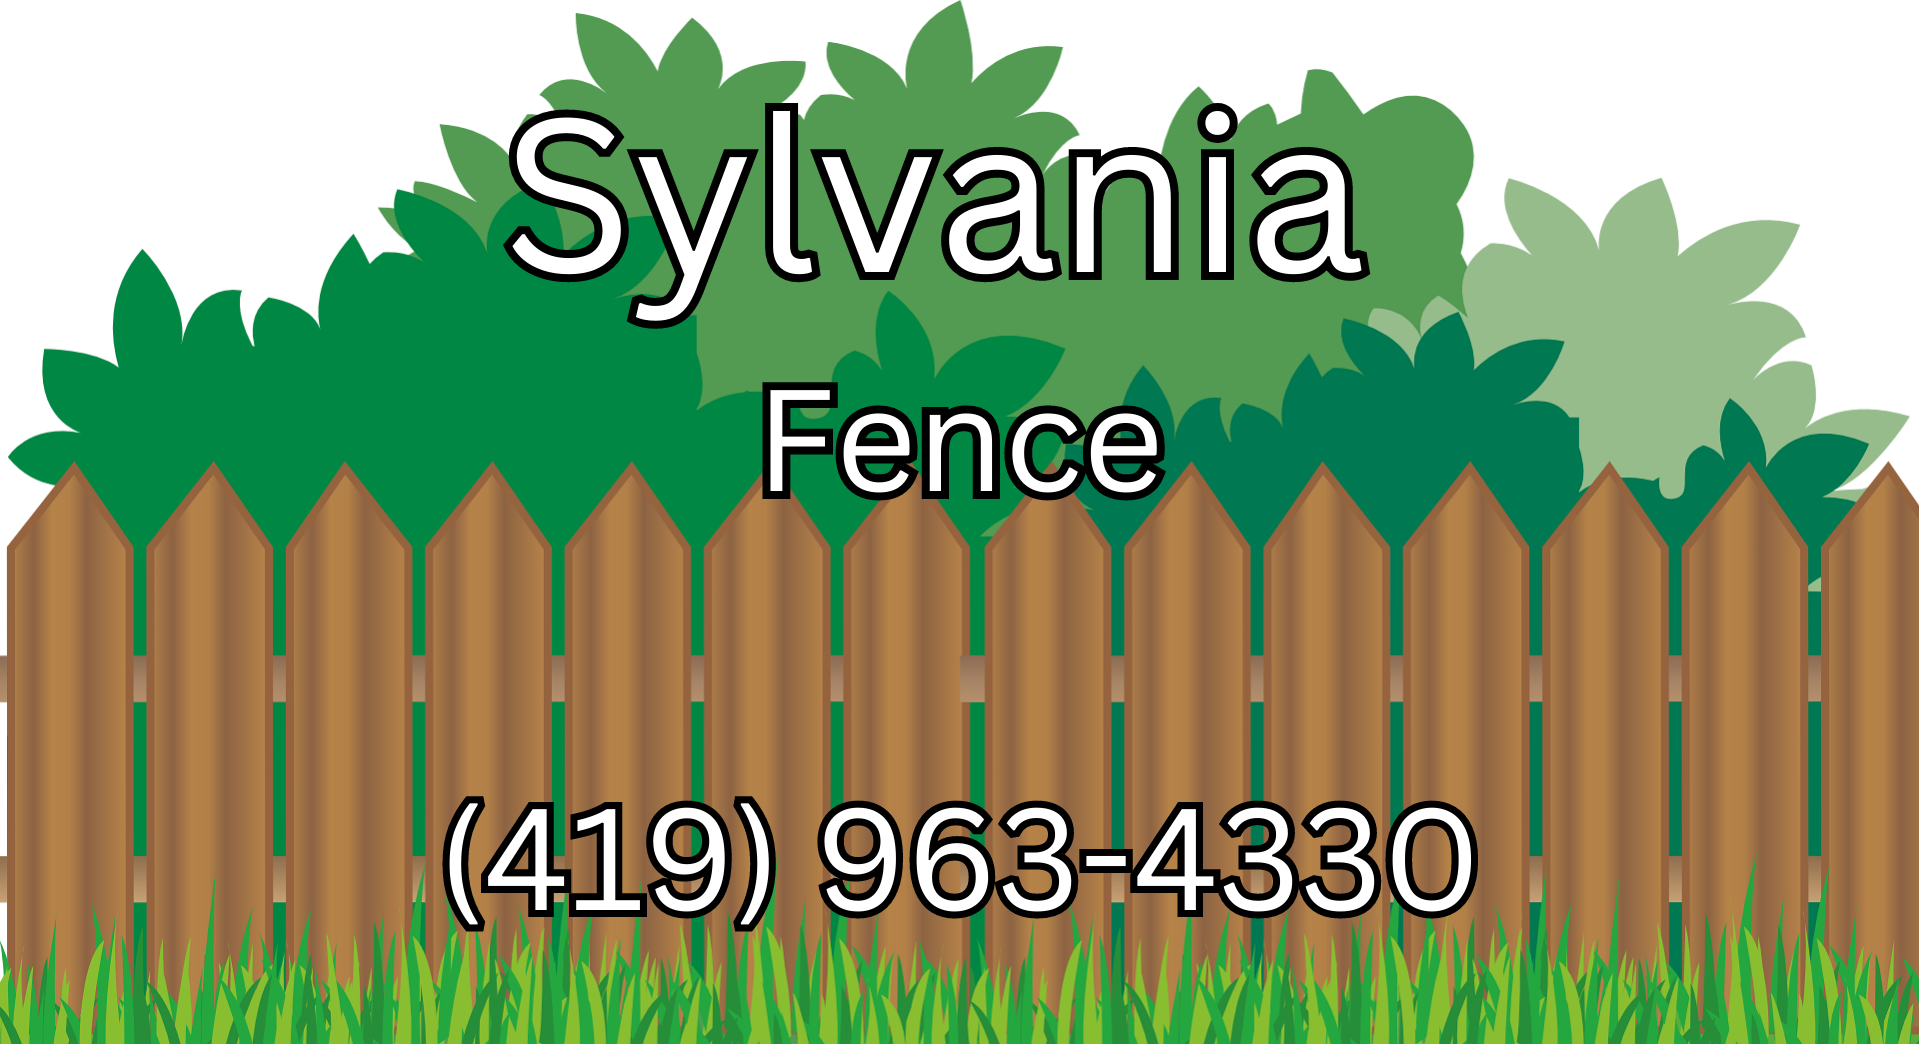 Fence Companies Near Me Sylvania Ohio